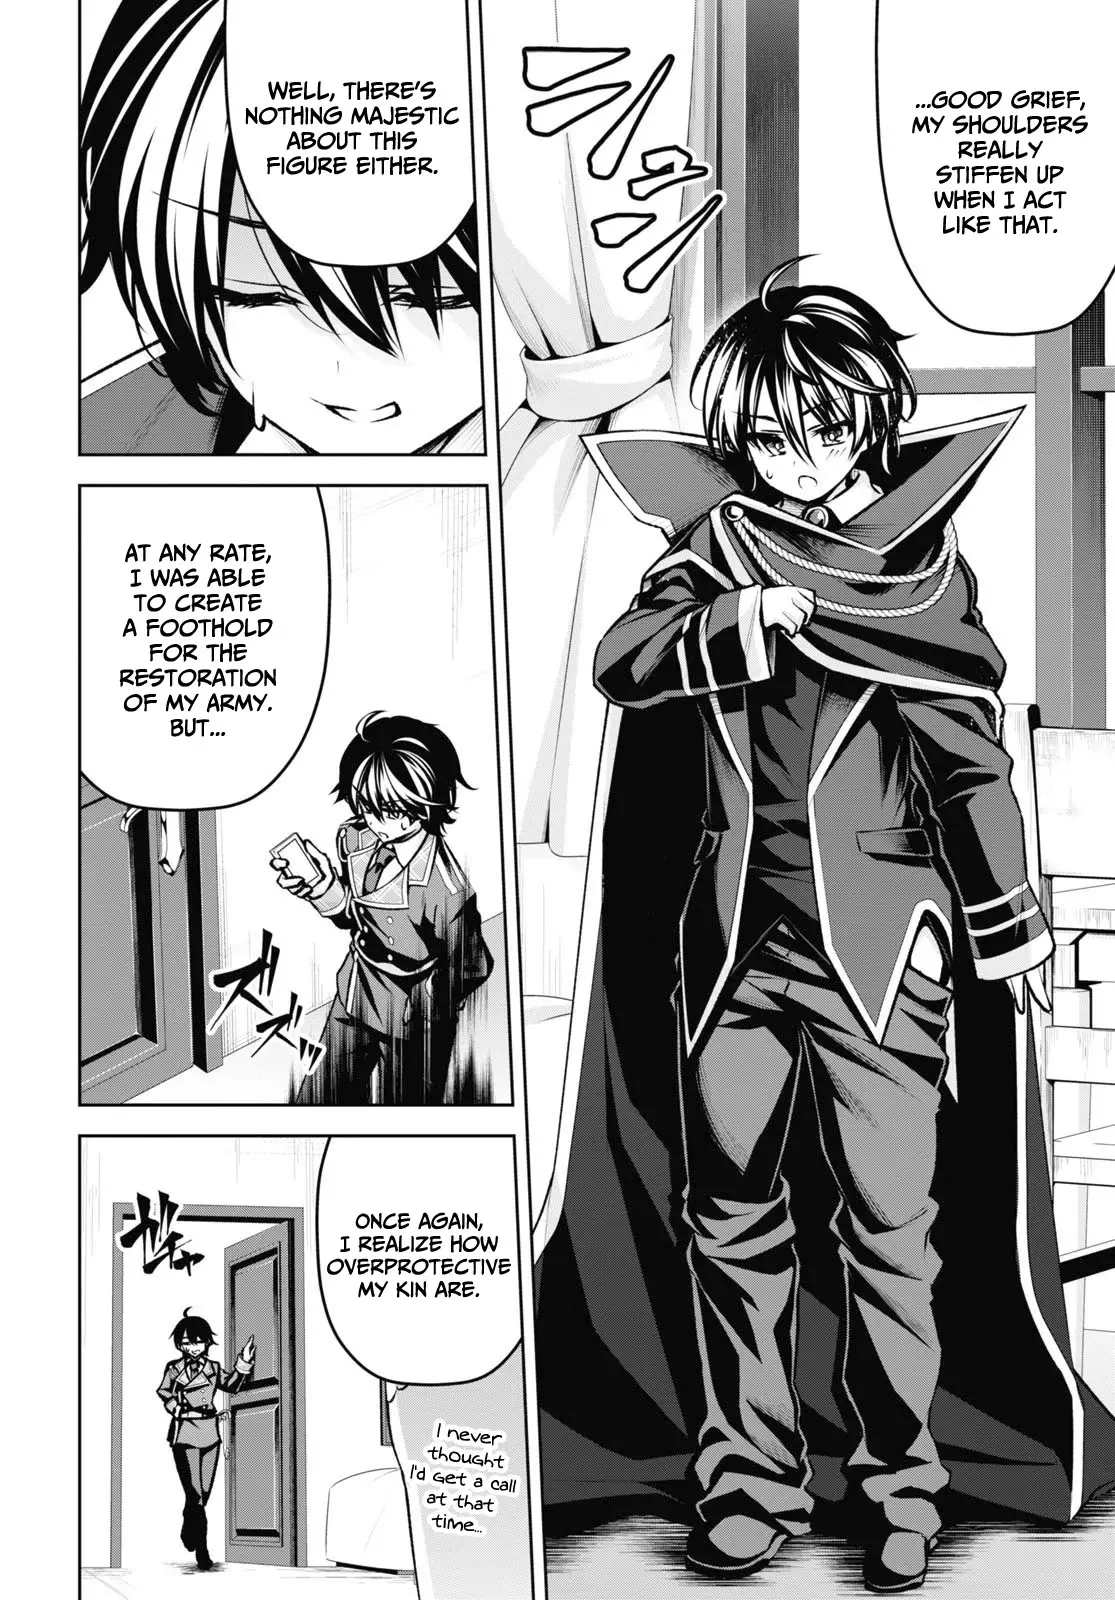 Demon's Sword Master Of Excalibur School - 21 page 13-0f92ad46